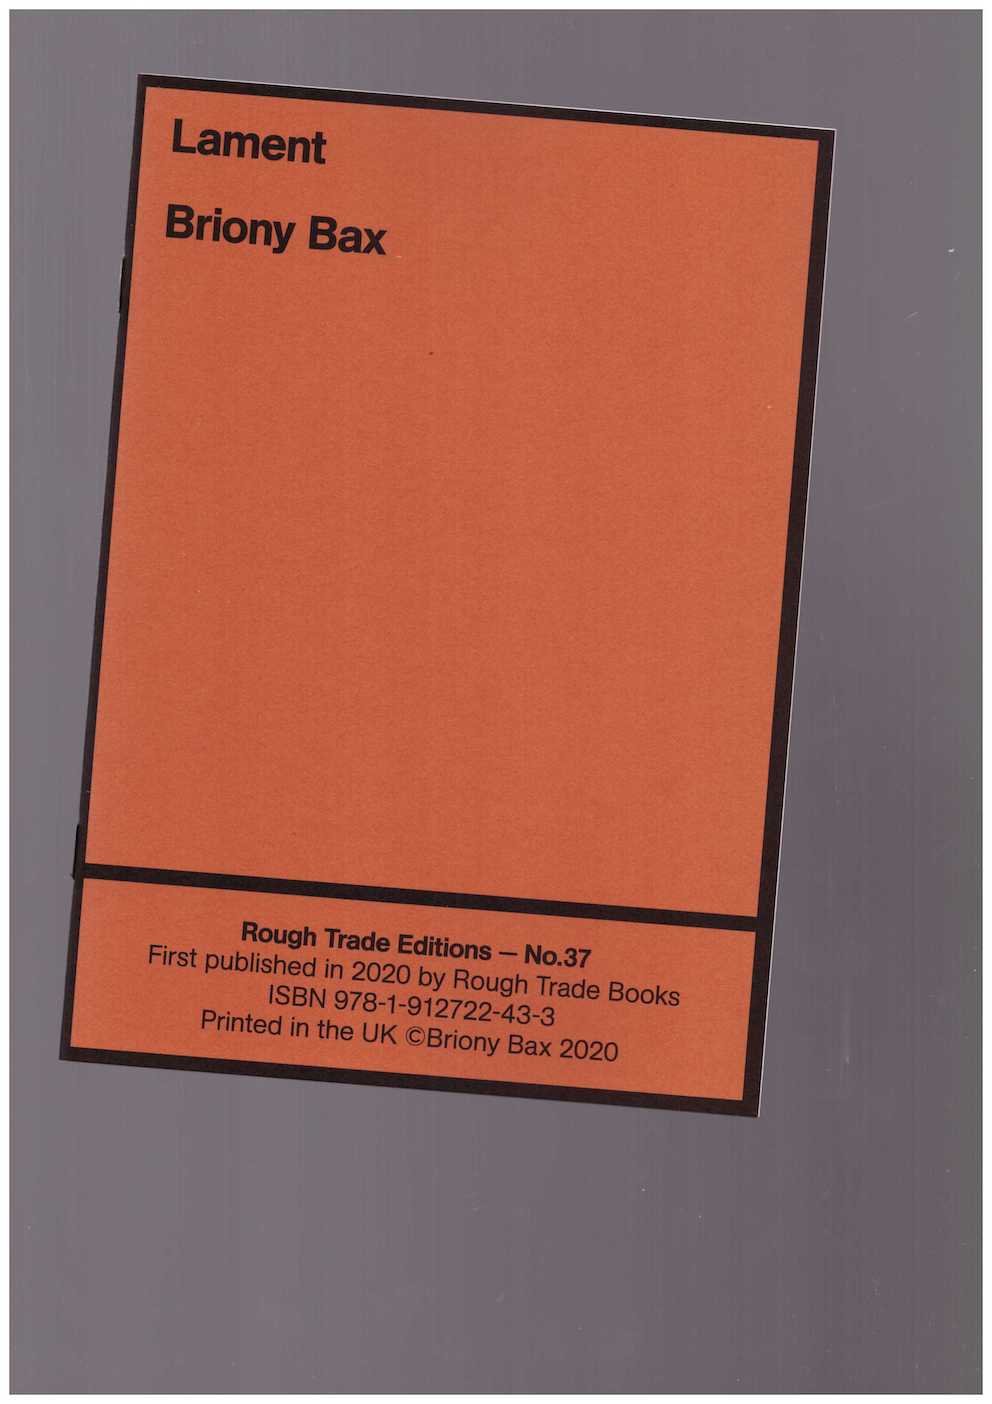 BAX, Briony - Rough Trade Editions #37: Lament